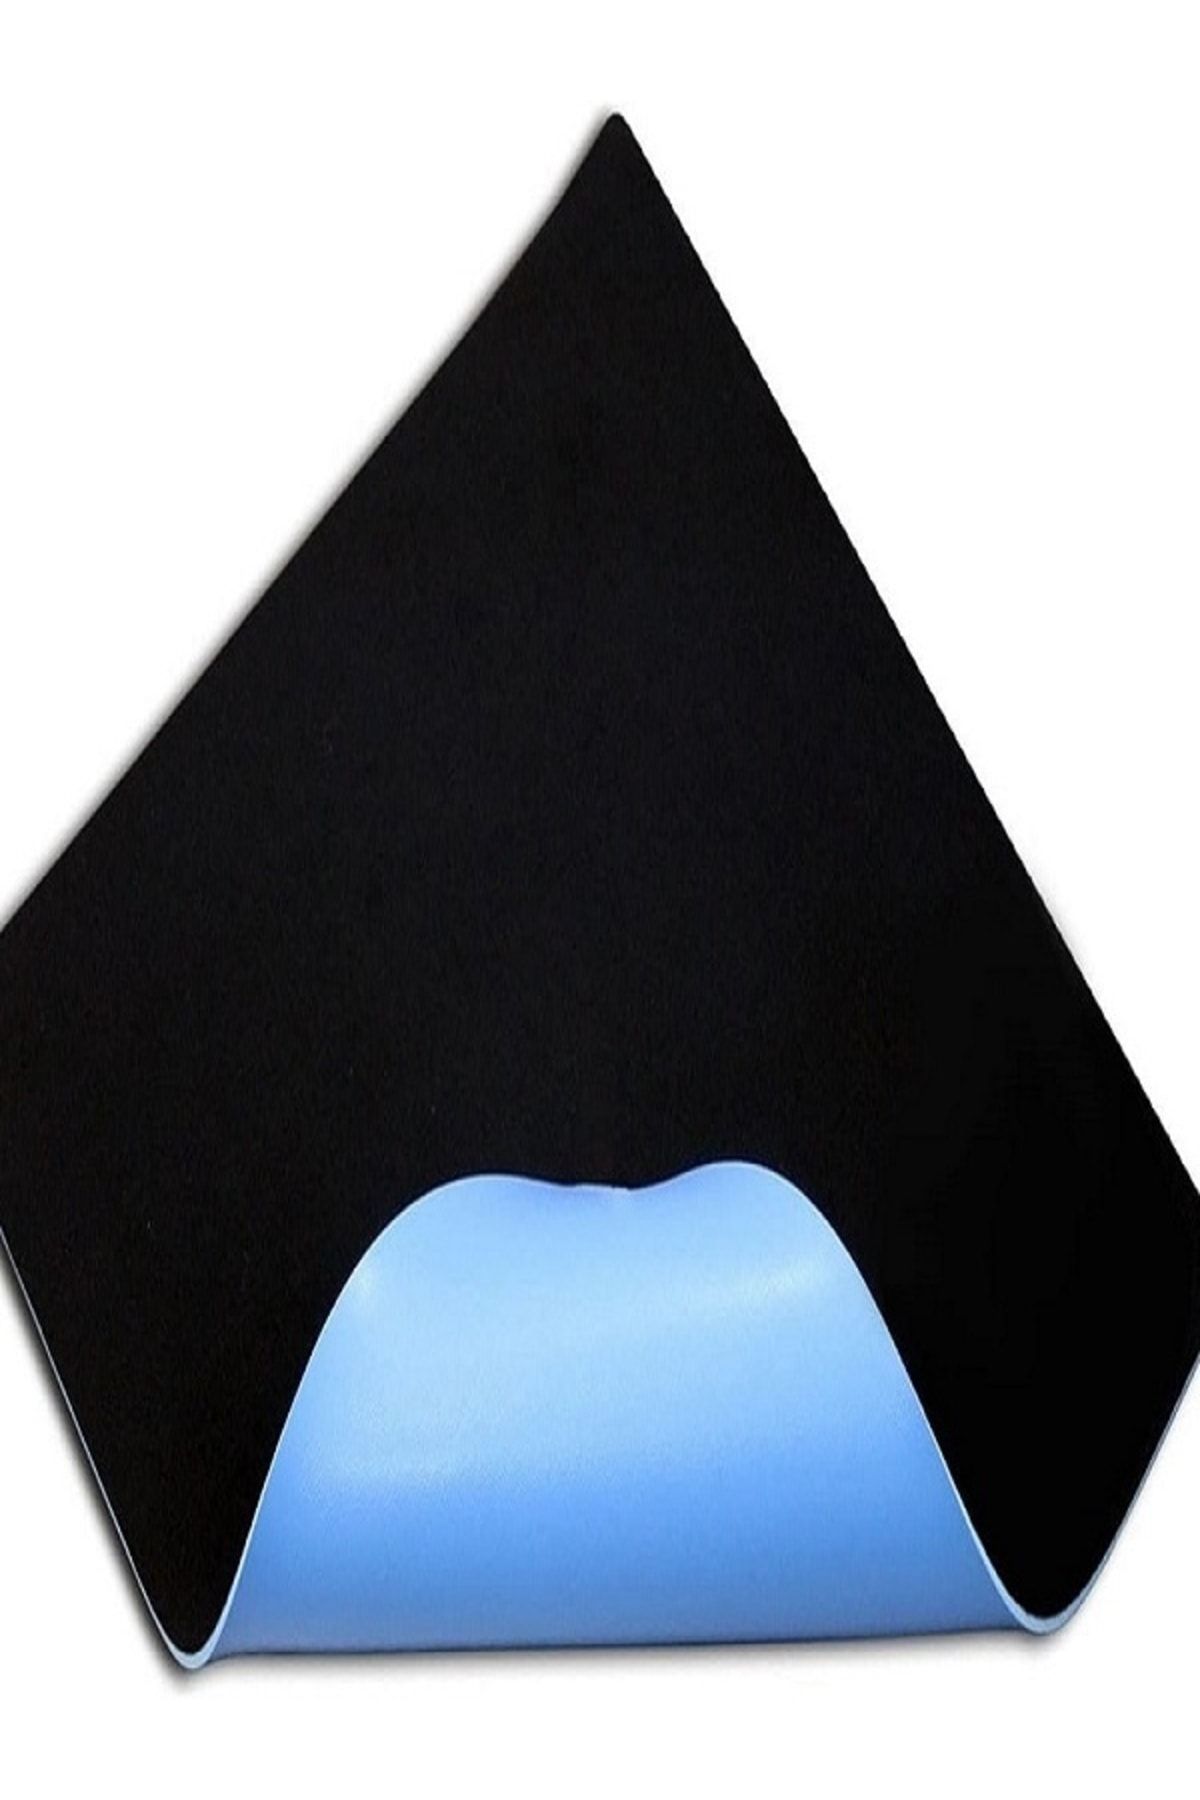 Lunatic Siyah Mavi Taban 30cm X 40cm Suya Dayanıklı Ofis Gaming Kayma Titreme Yapmayan 2mm Mouse Pad